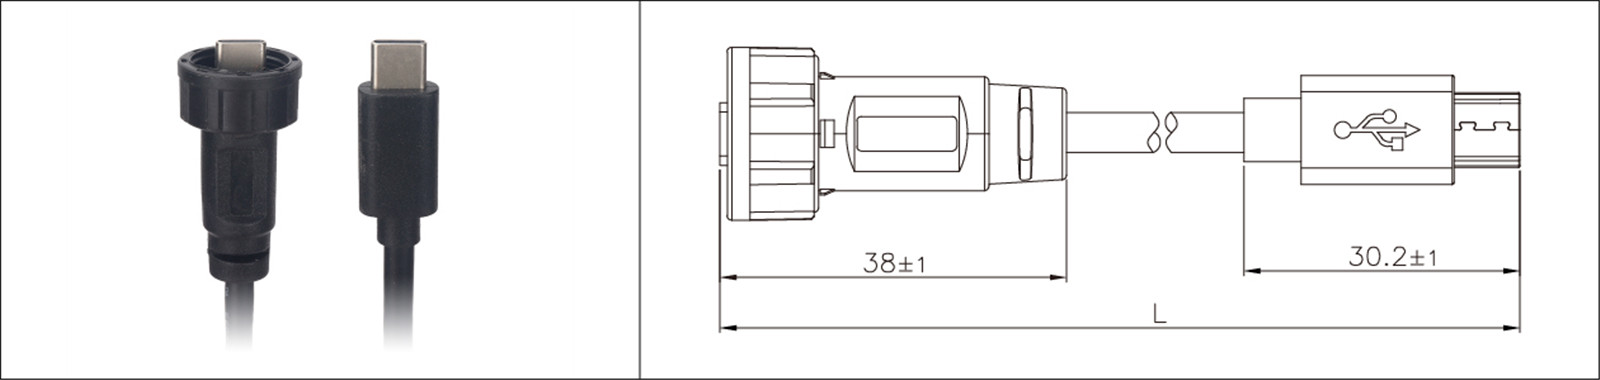 Micro USB panel typ 2.0 3.0 samice a samec vodotěsný IP67 prodlužovací kabel průmyslový konektor-02 (7)